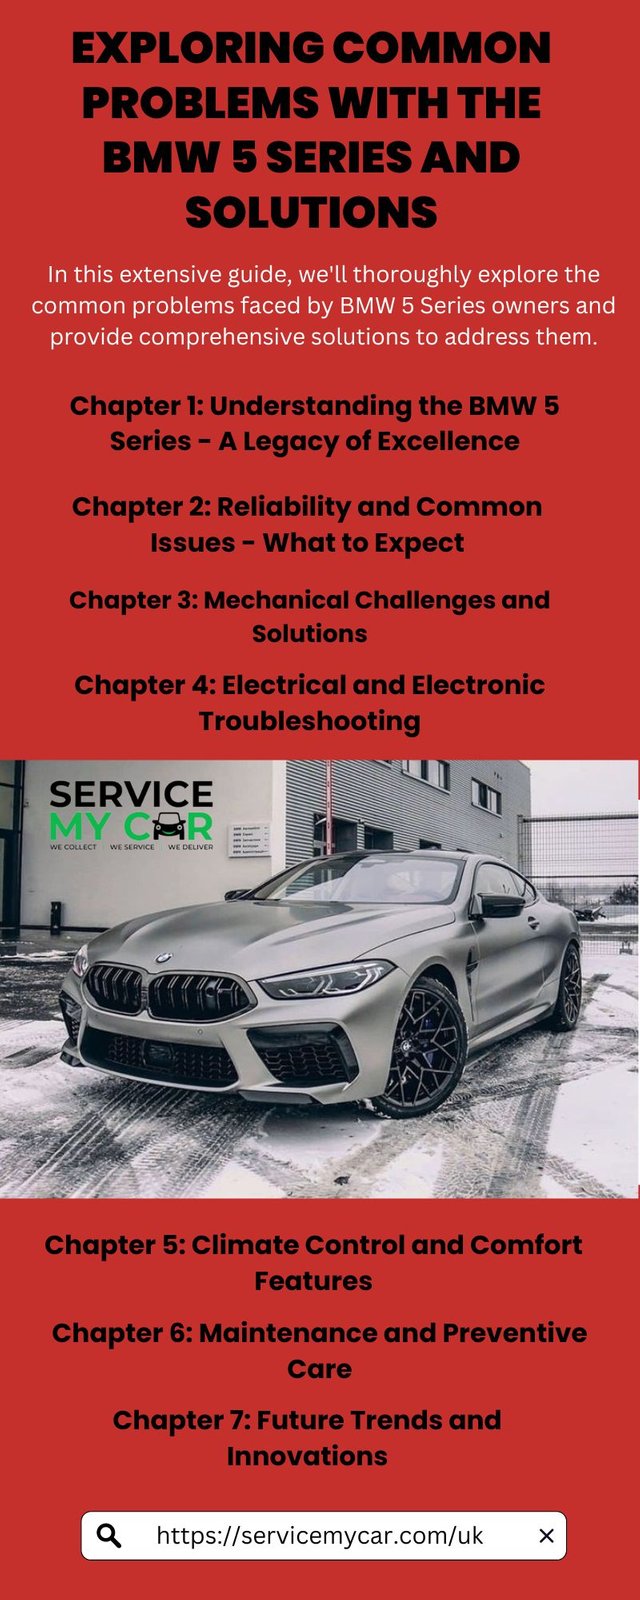 BMW 5 series info